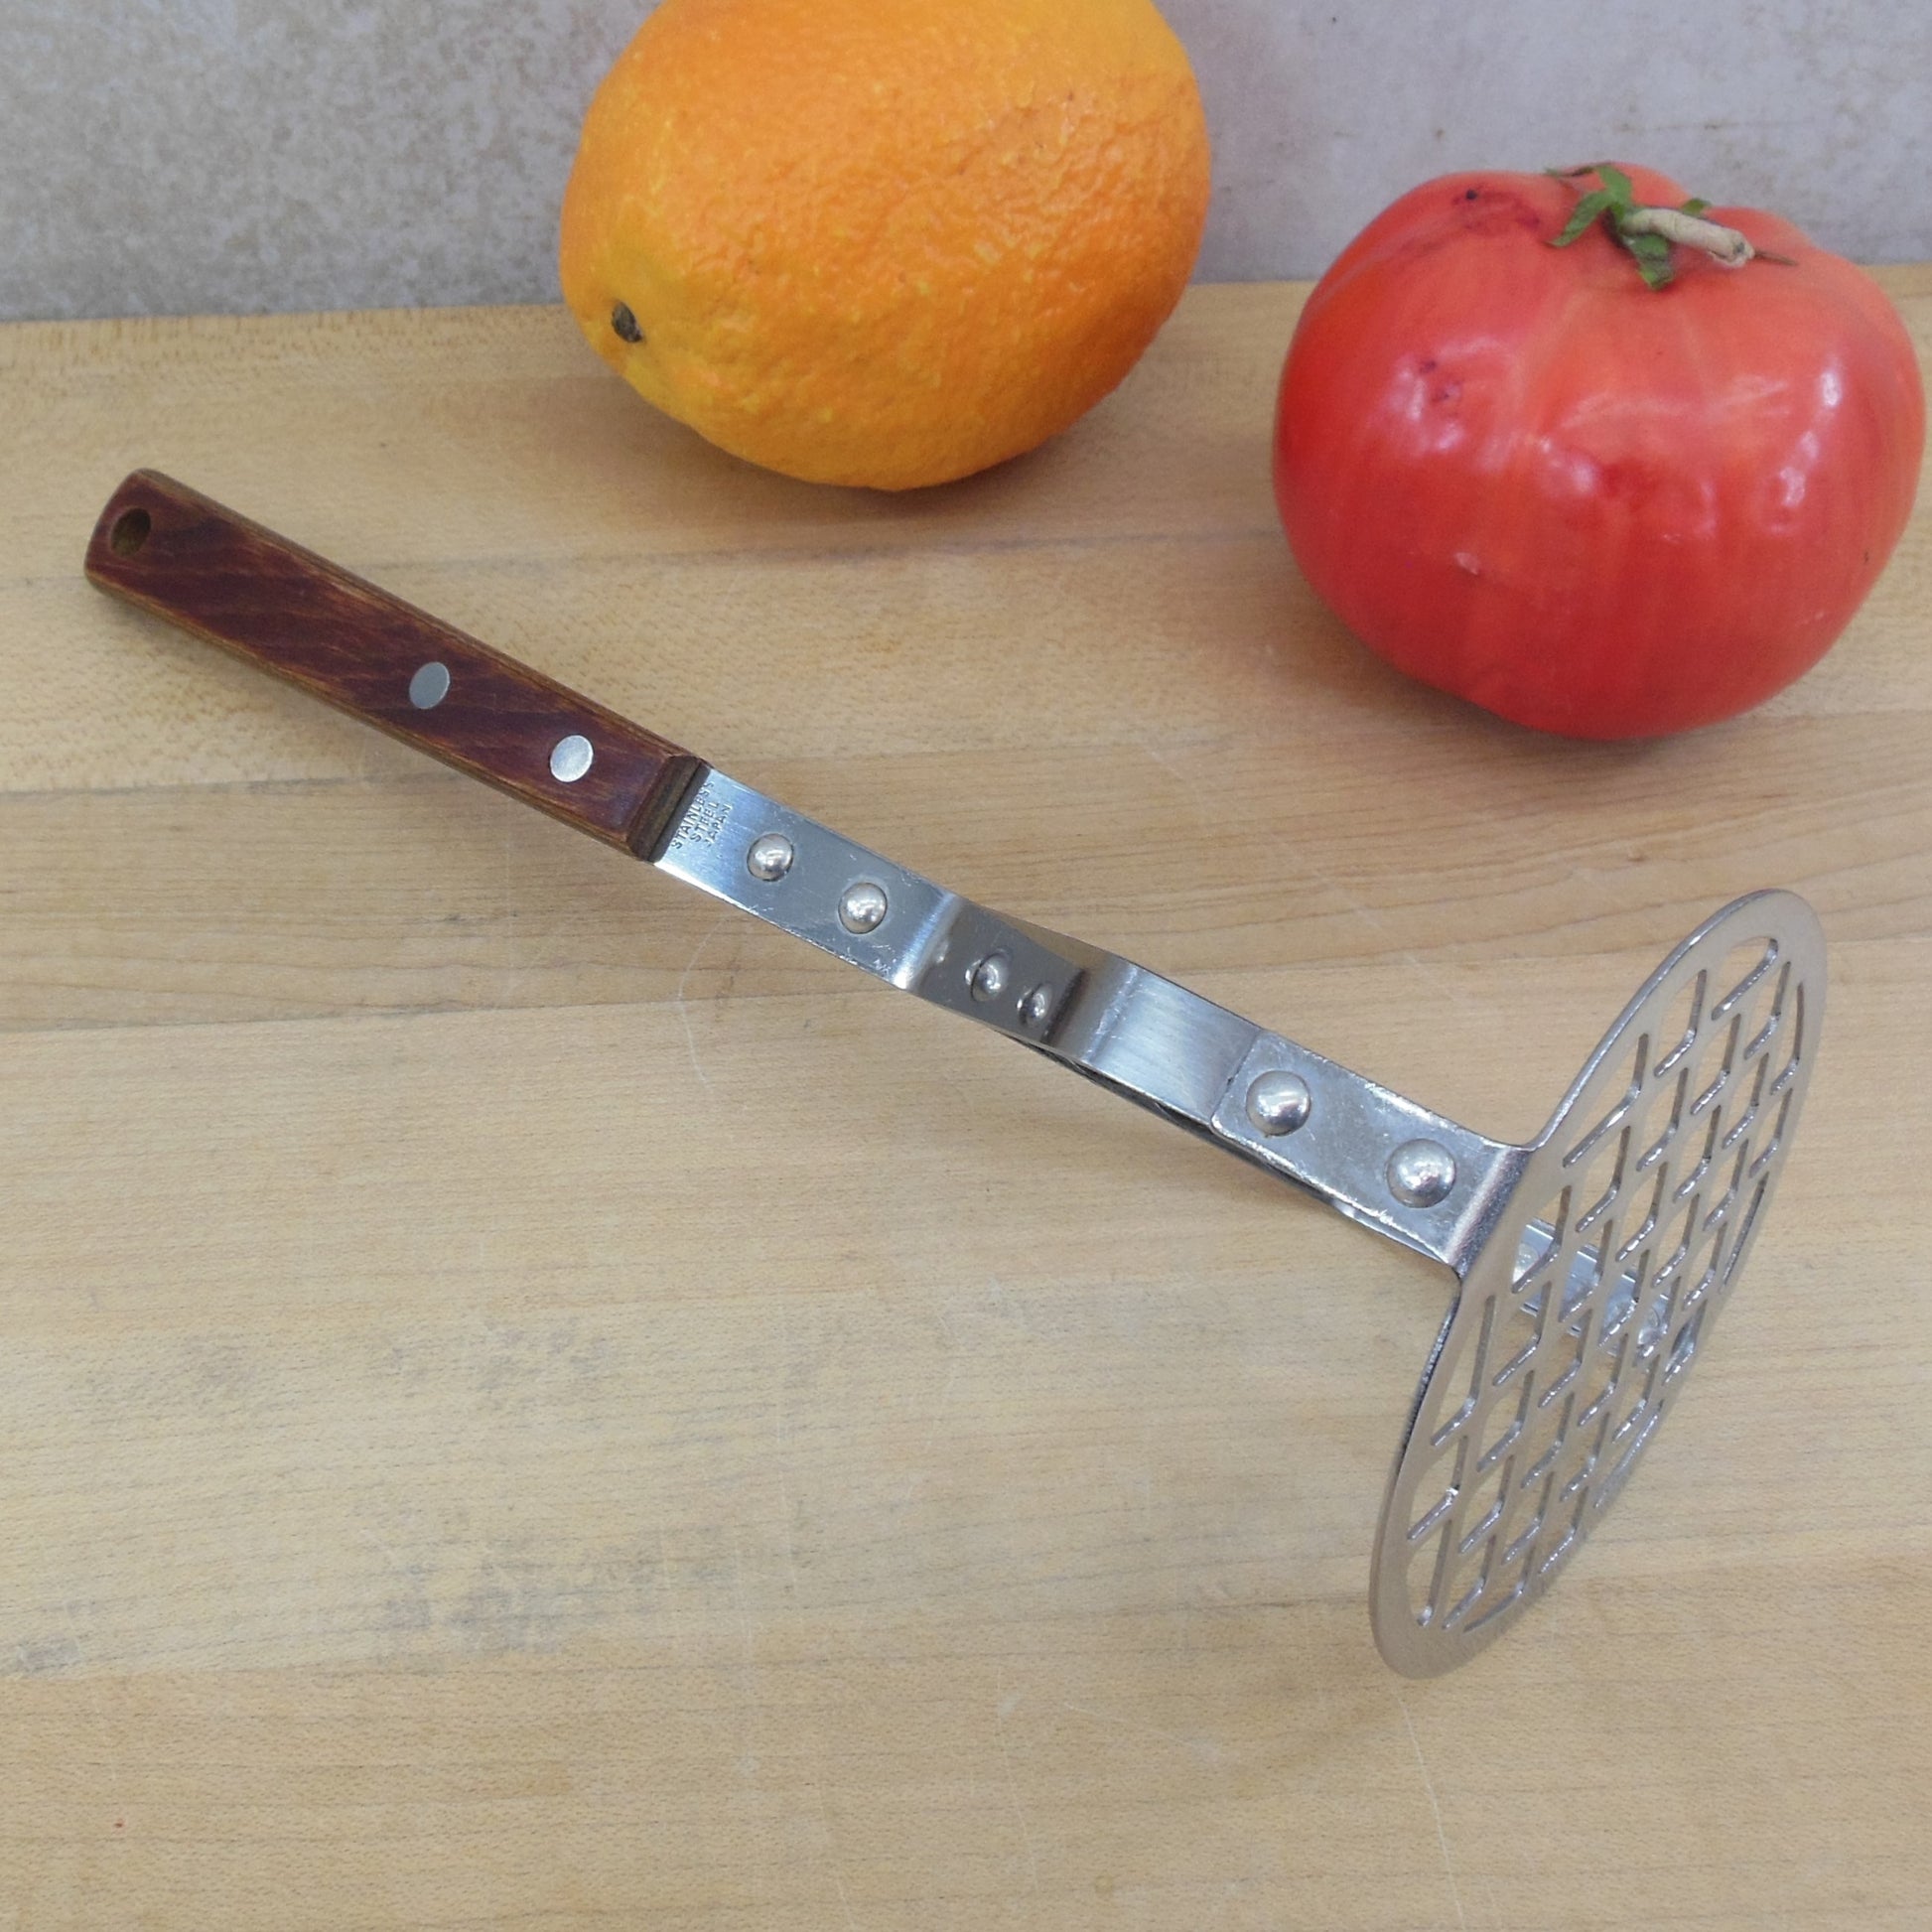 Potato masher, S/S w/ Wood handle